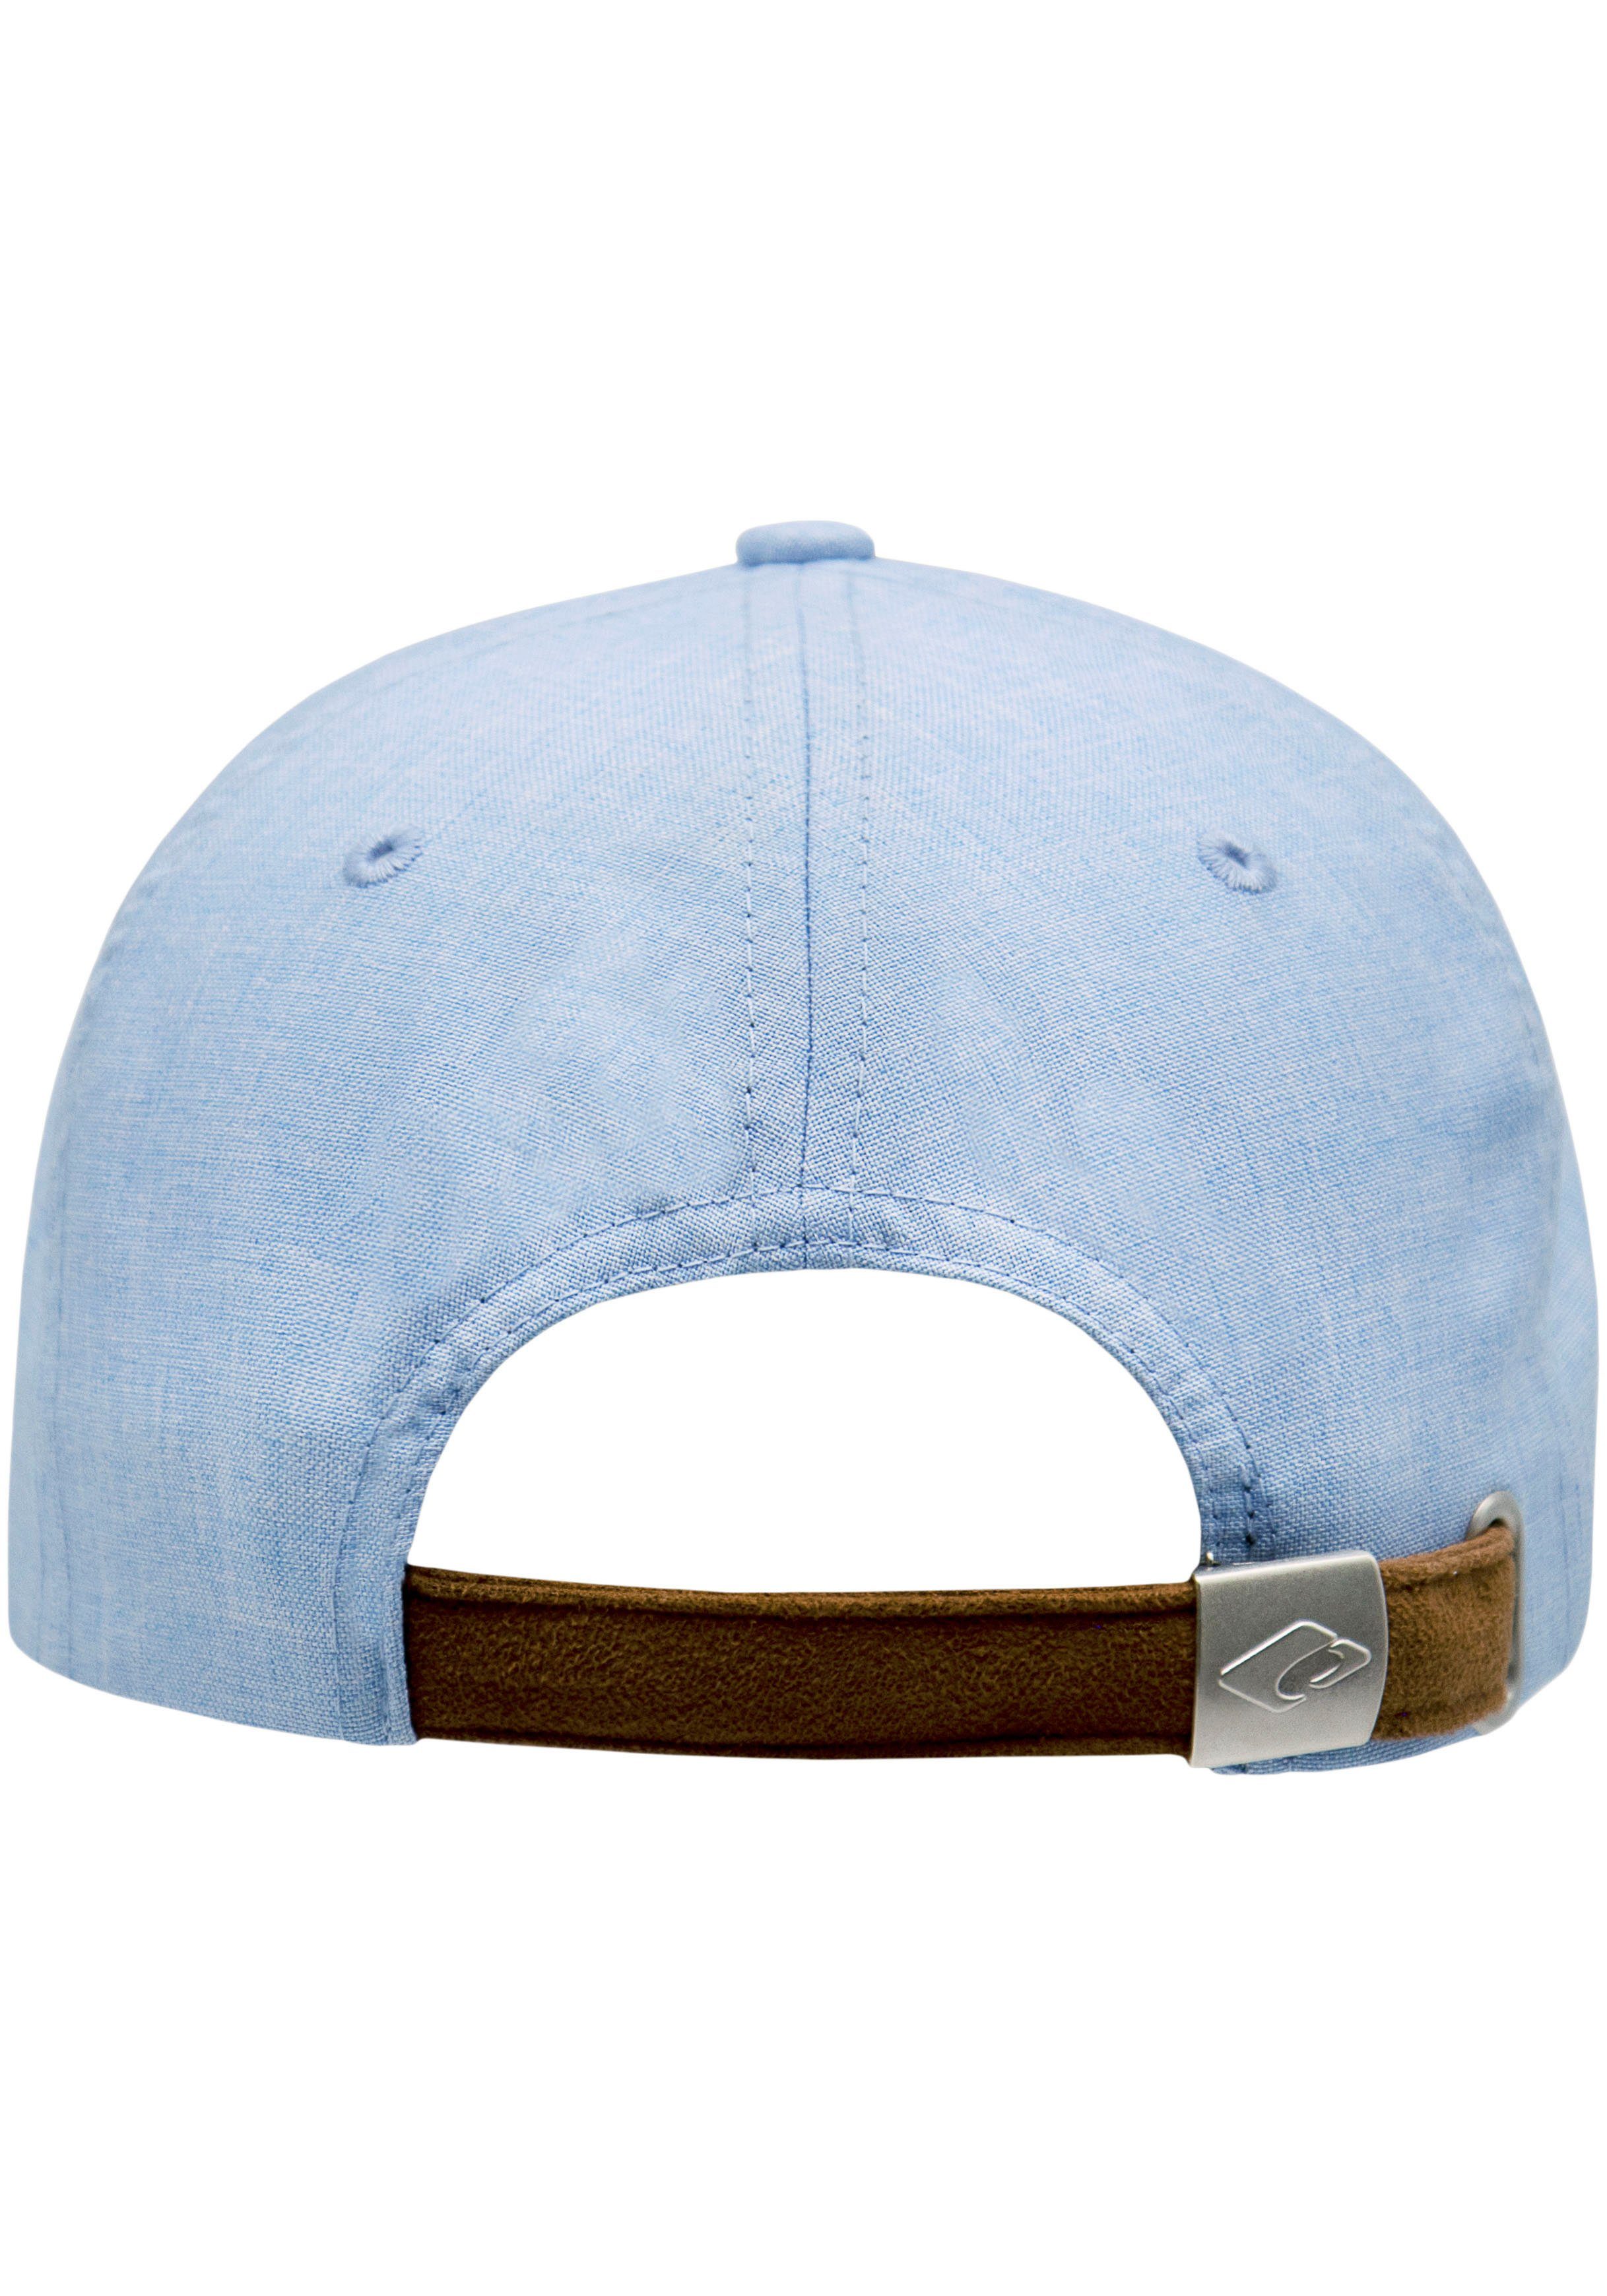 chillouts Baseball Cap Size, One Amadora Hat hellblau verstellbar Optik, in melierter